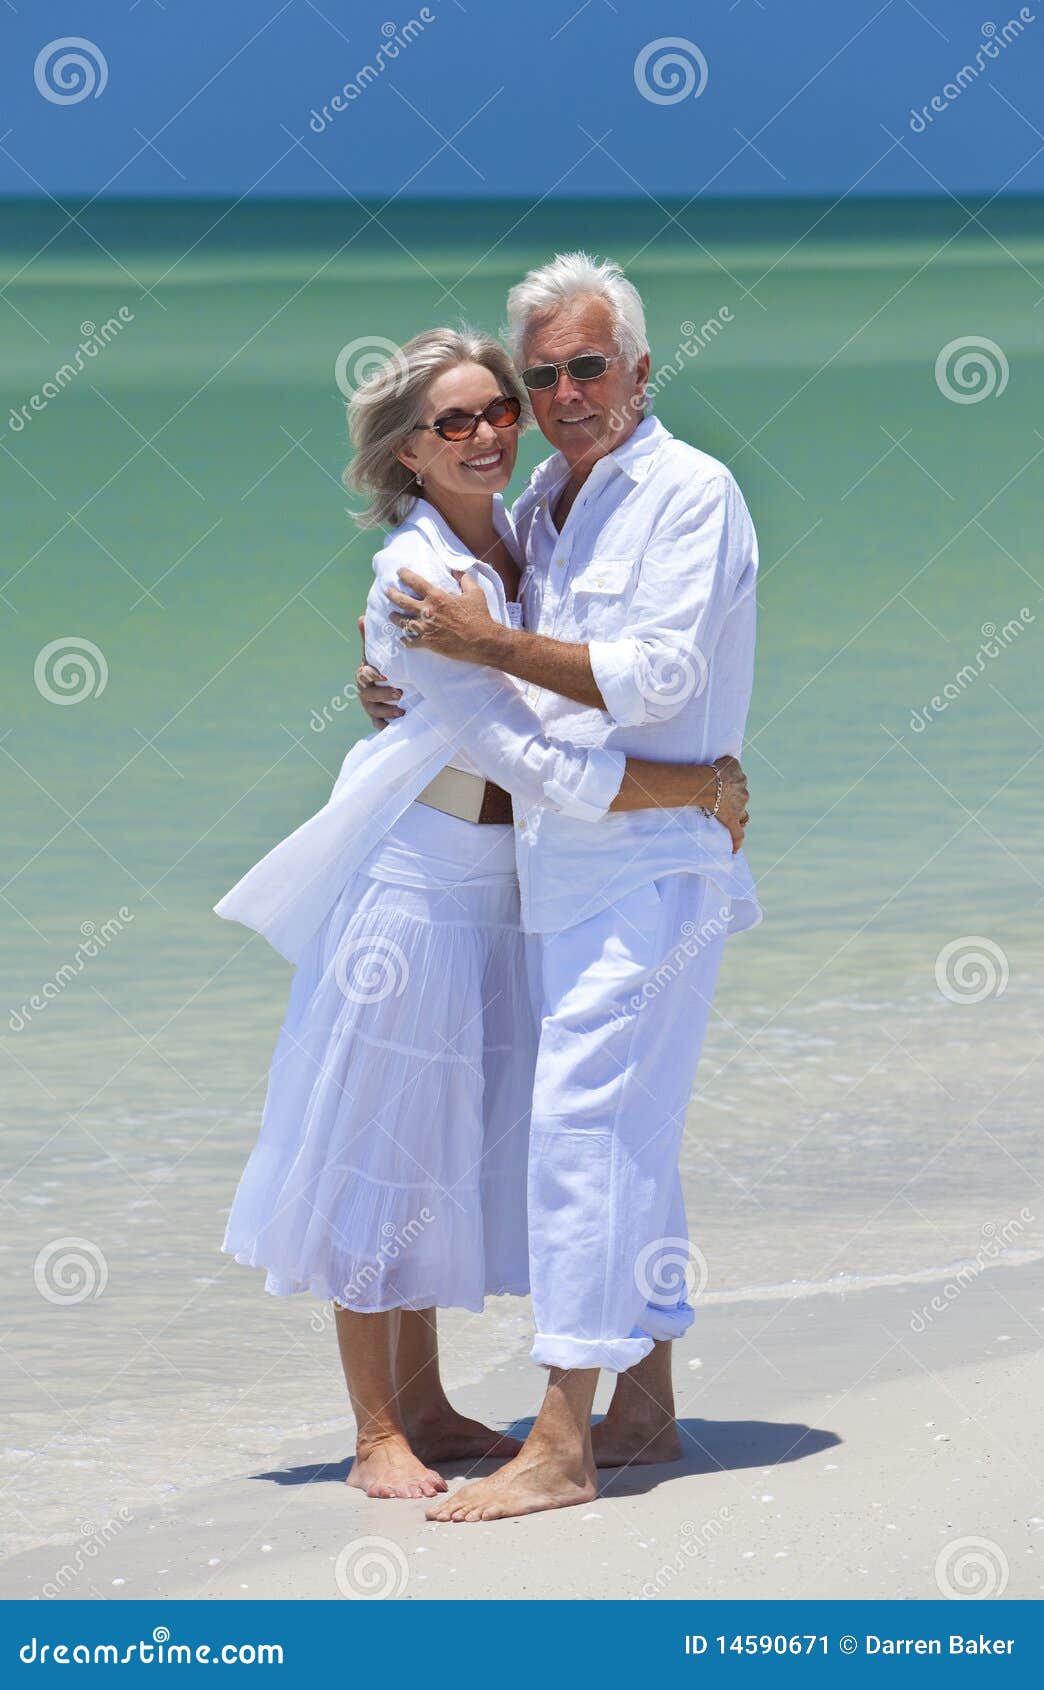 happy senior couple embracing on a tropical beach